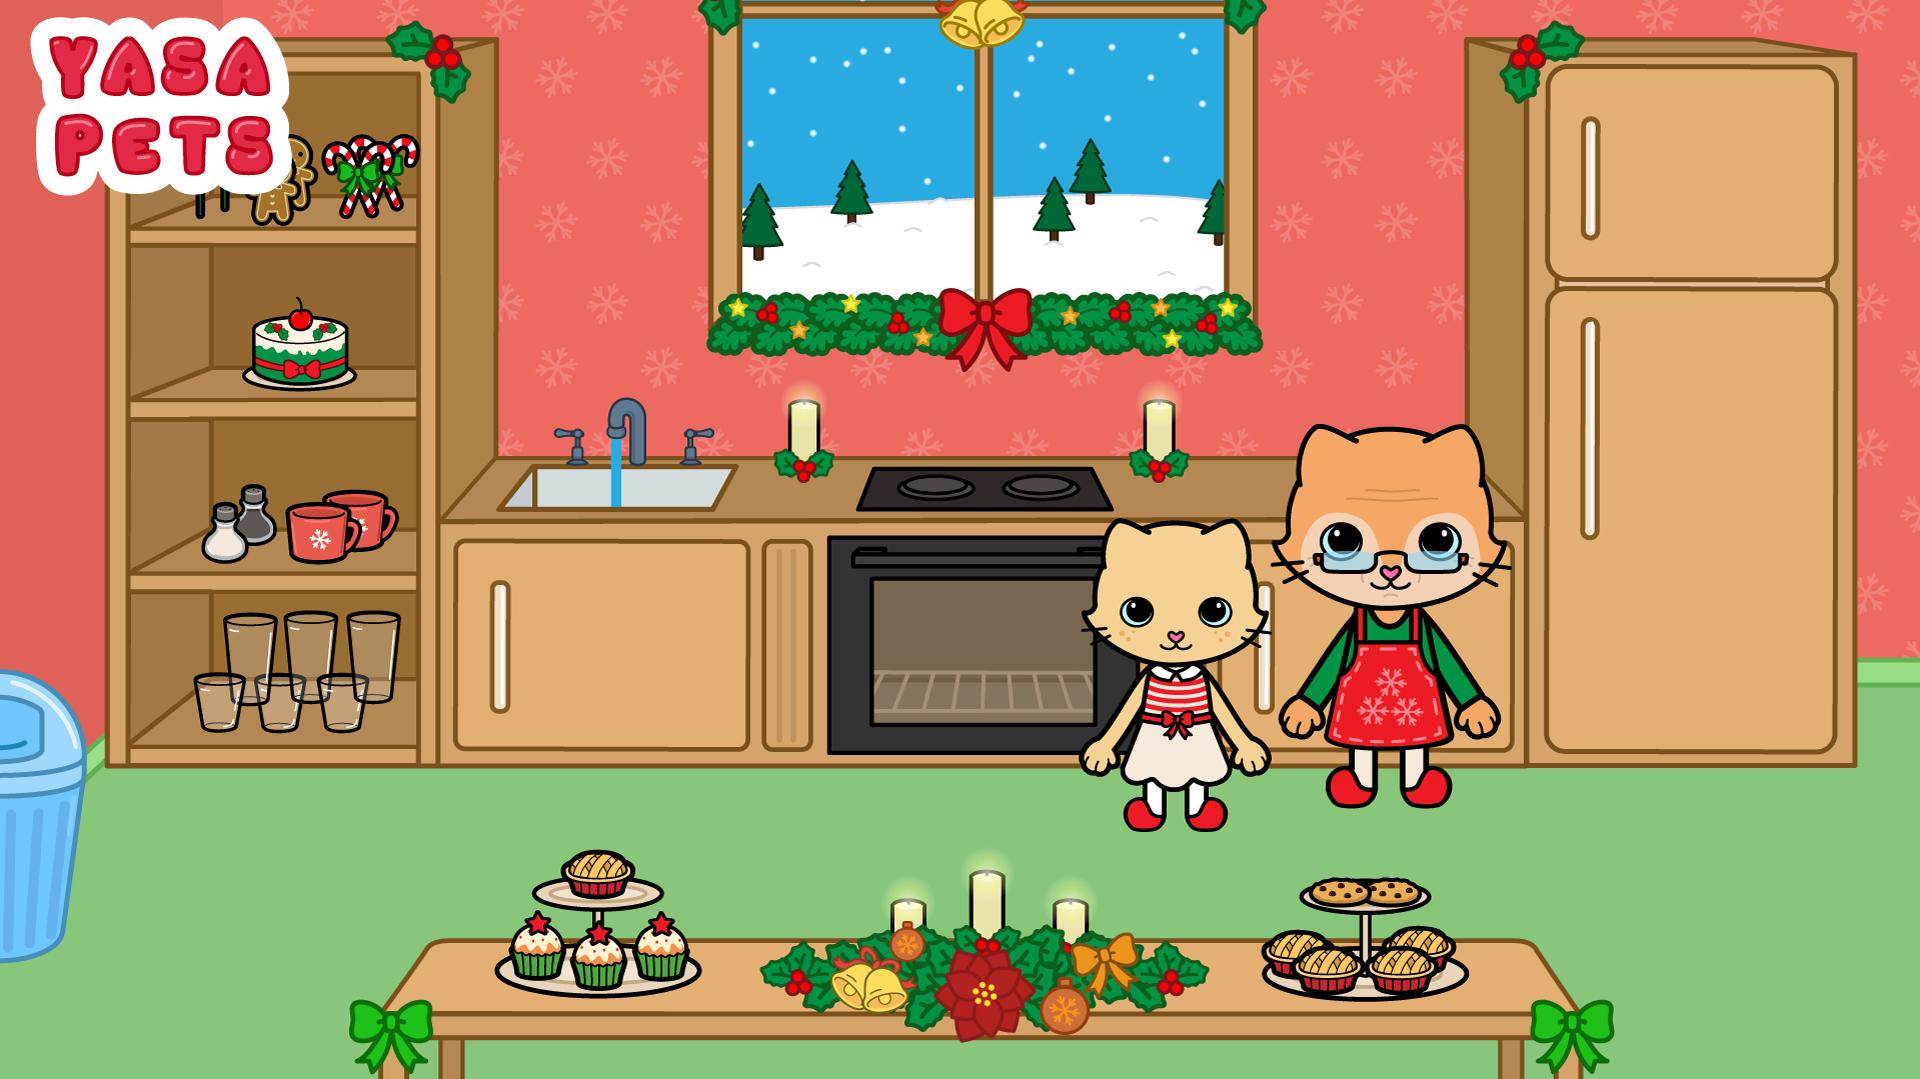 Yasa Pets Christmas 1.1 Screenshot 3